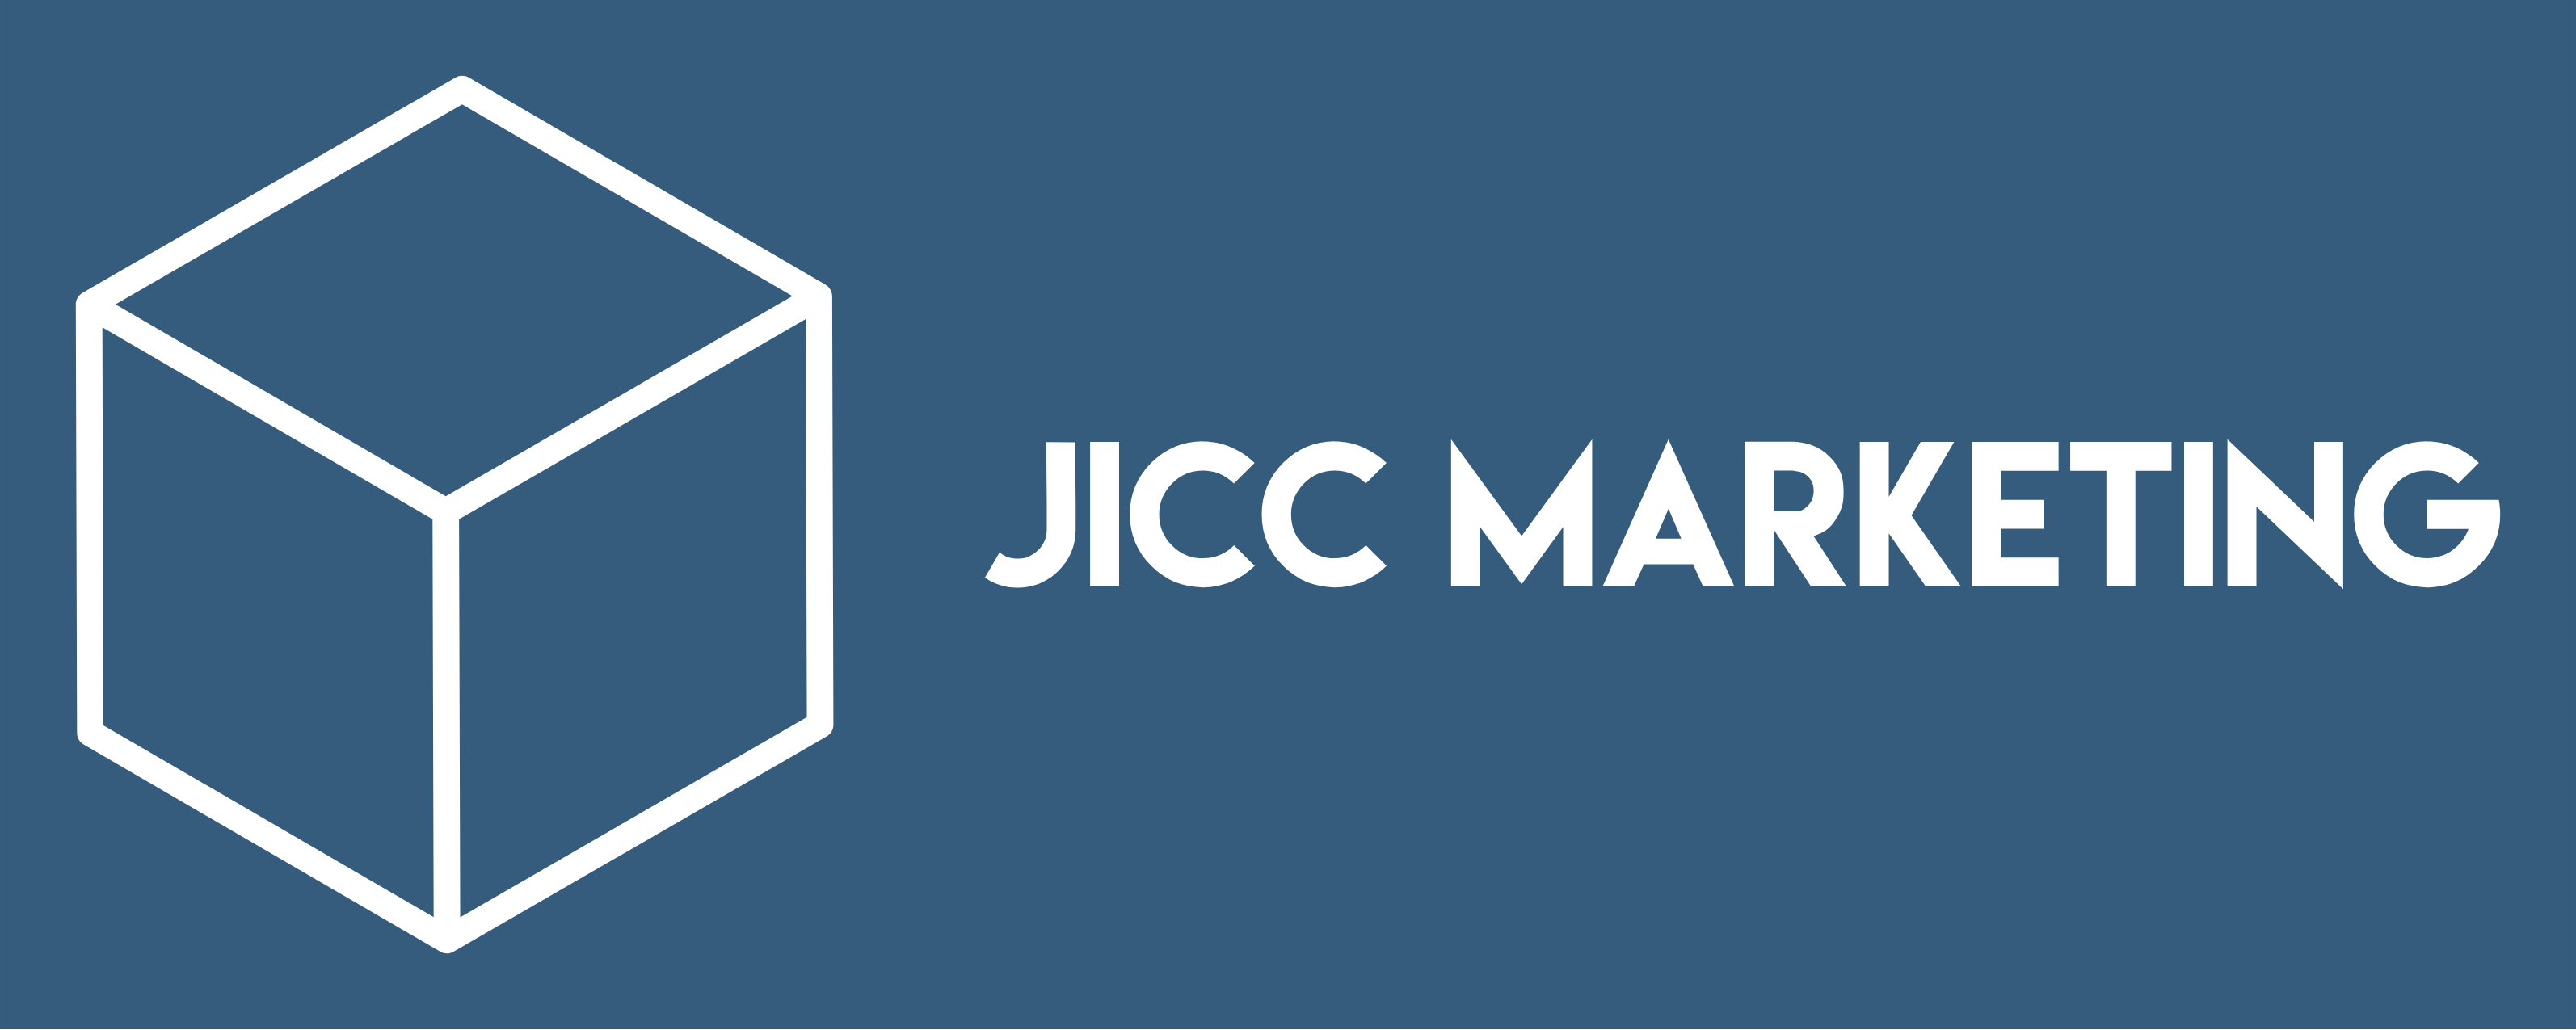 JICC Marketing